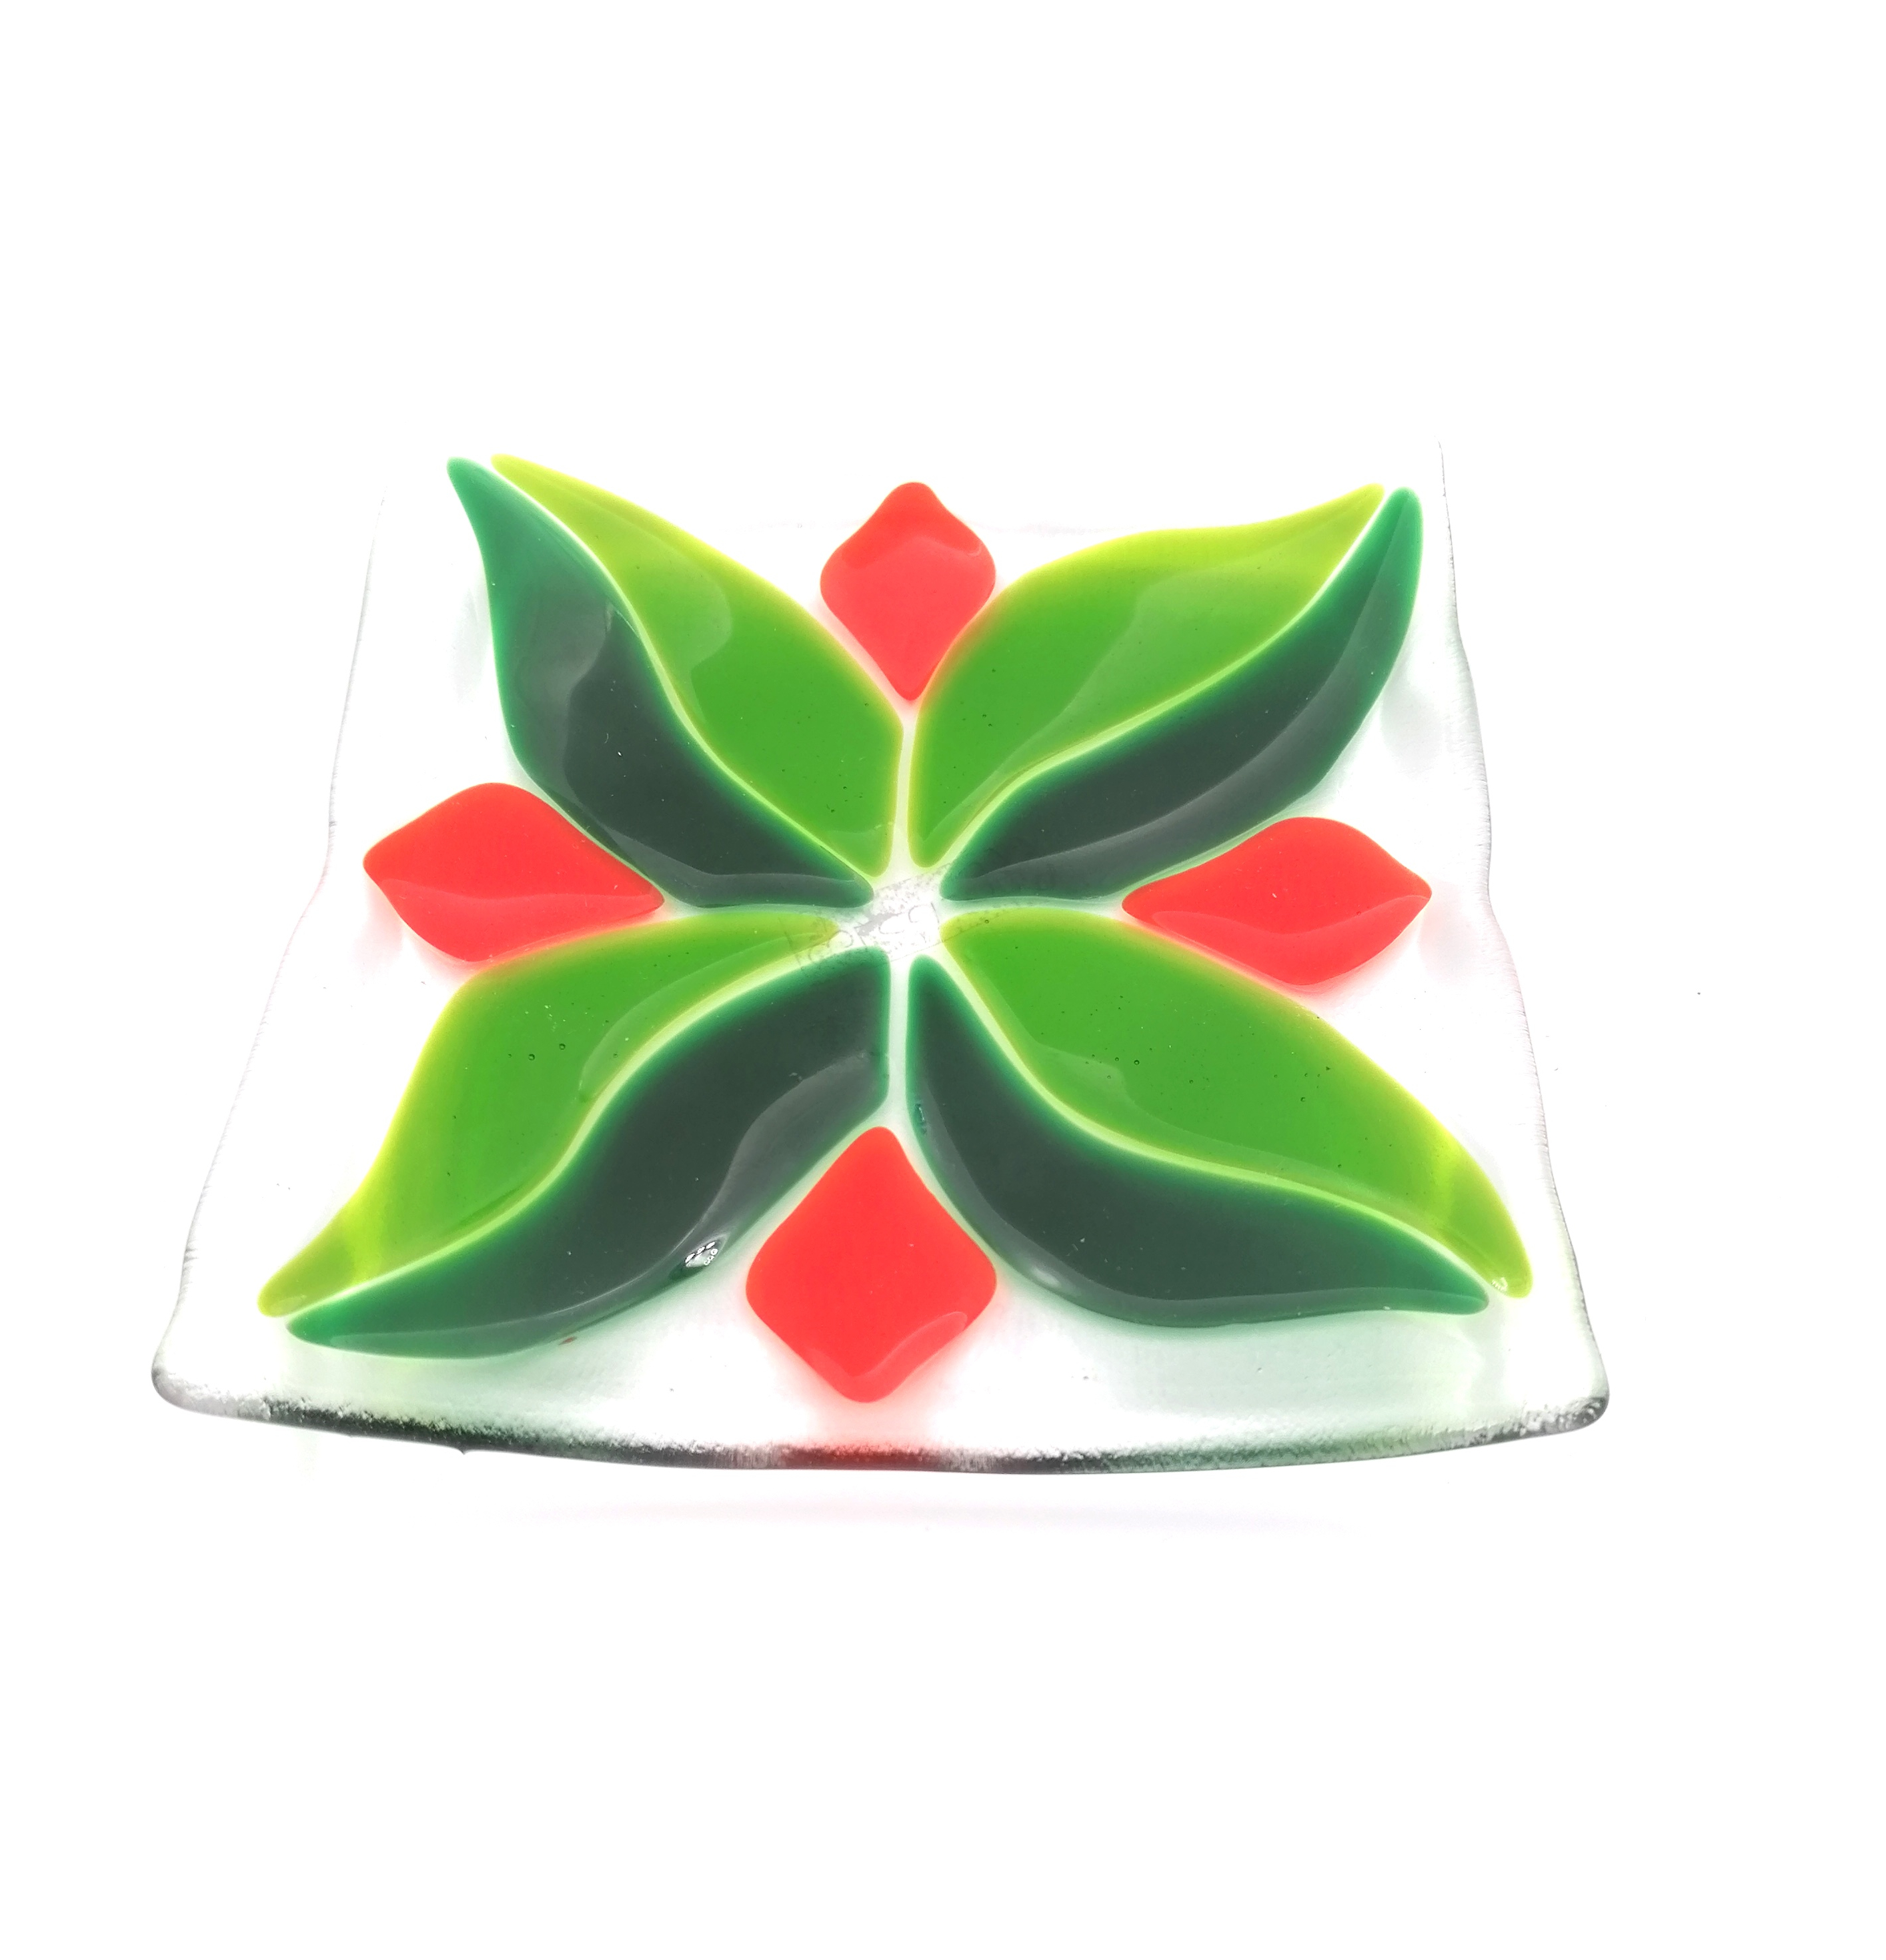 Transparant schaaltje vierkant groen oranje bloem 2